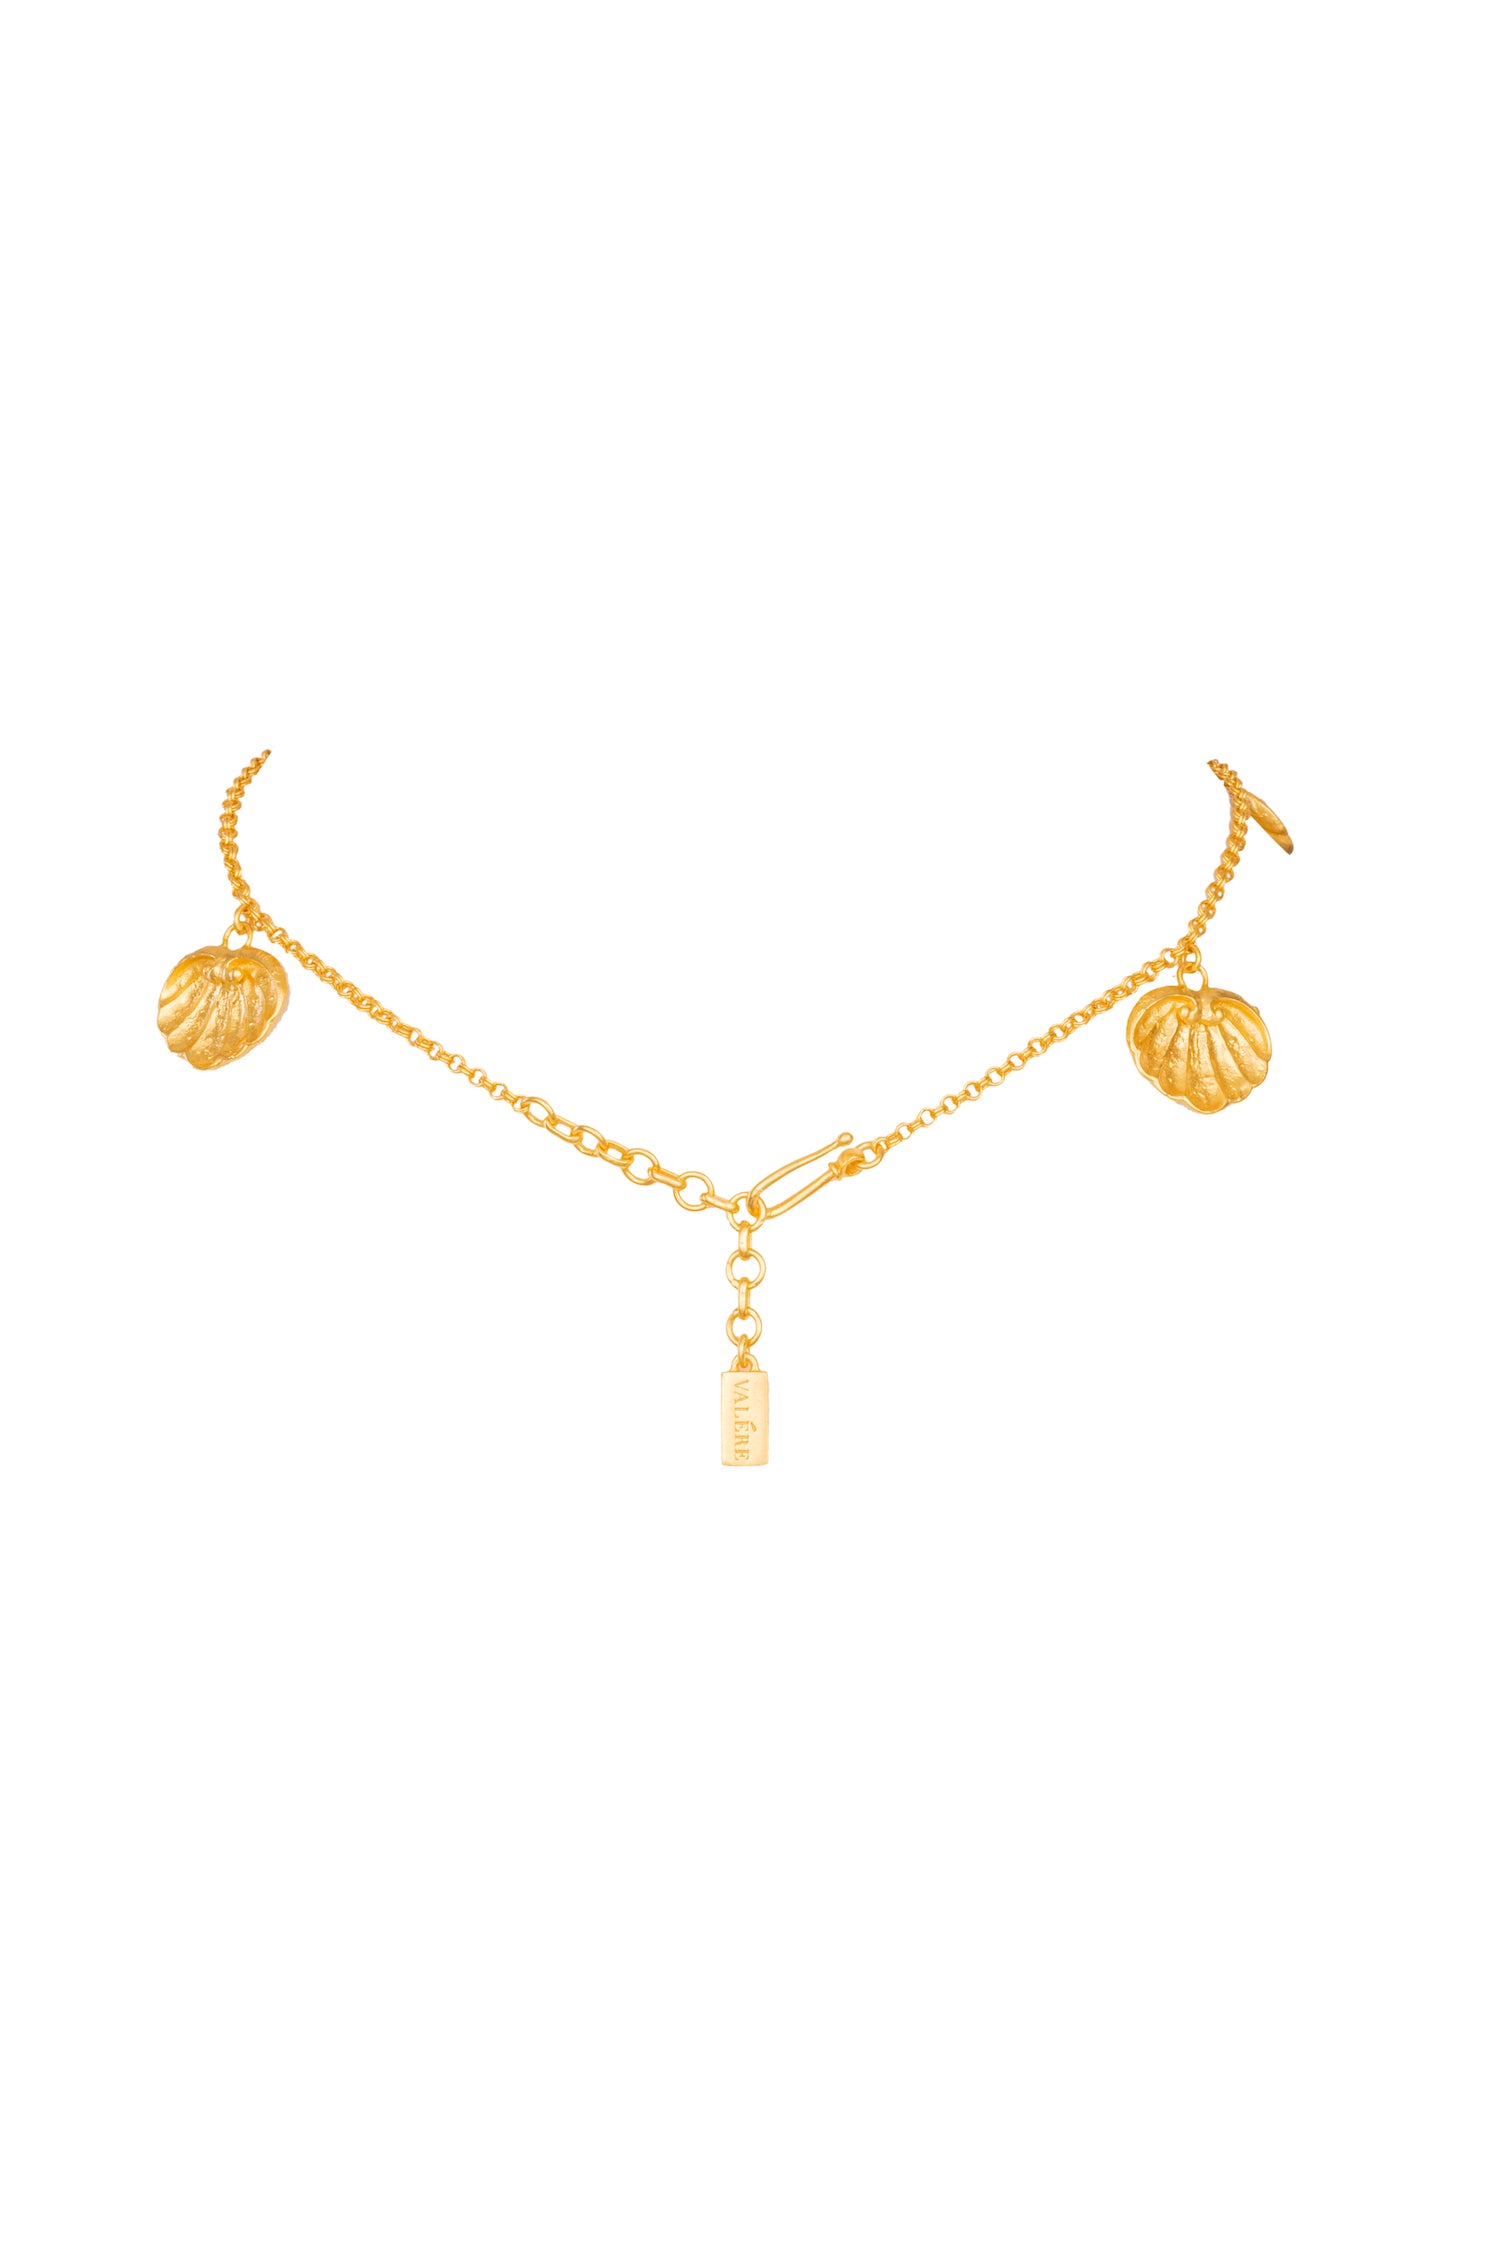 Valere Rococo Shell Necklace